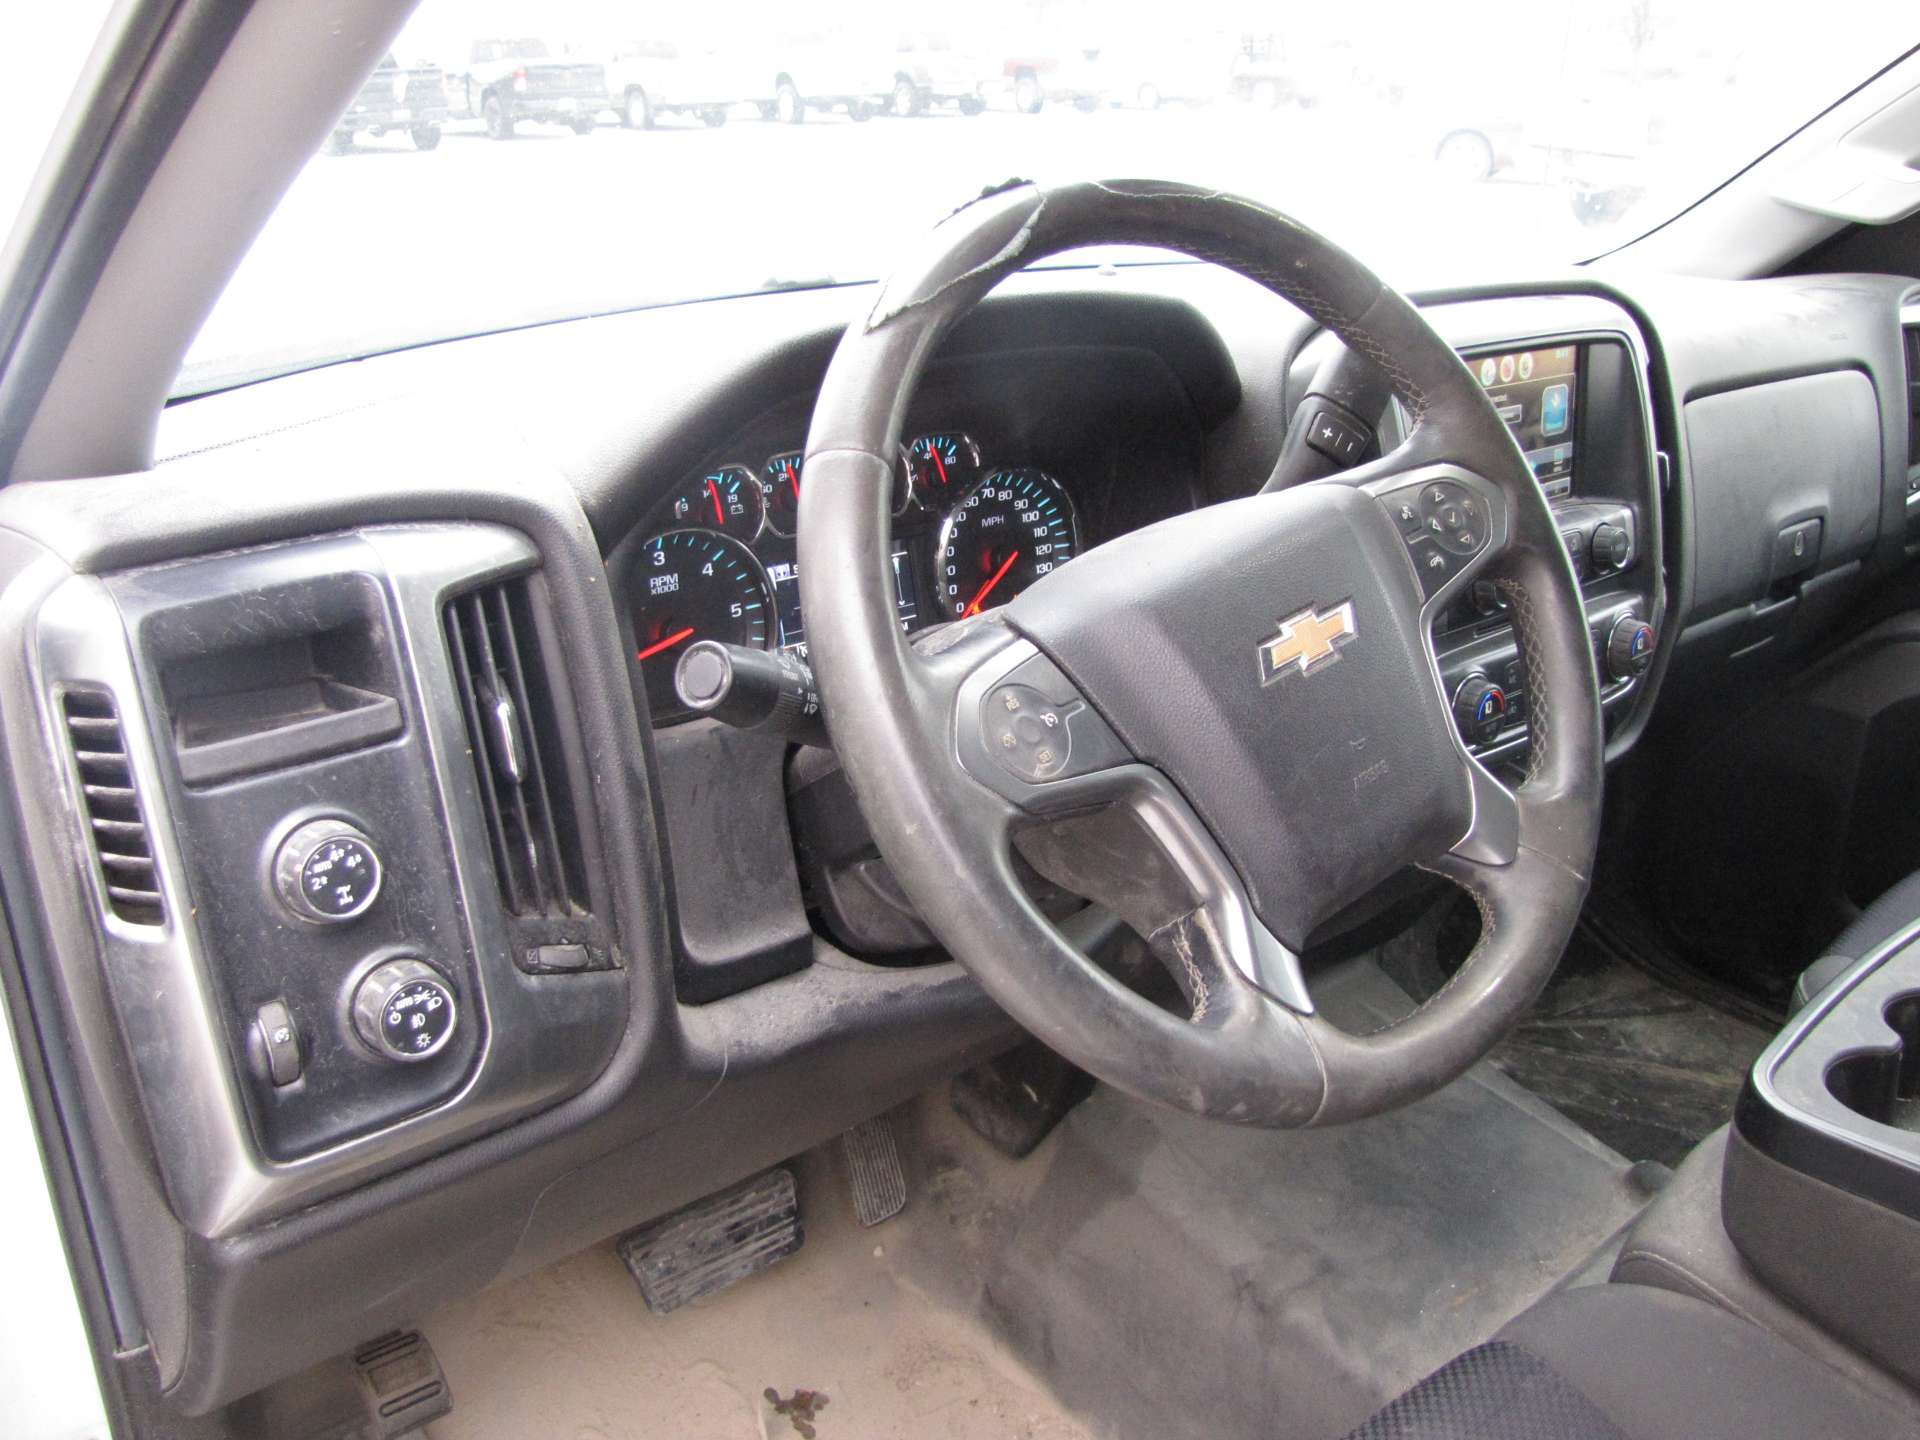 2014 Chevy Silverado 1500 pickup truck - Image 46 of 55